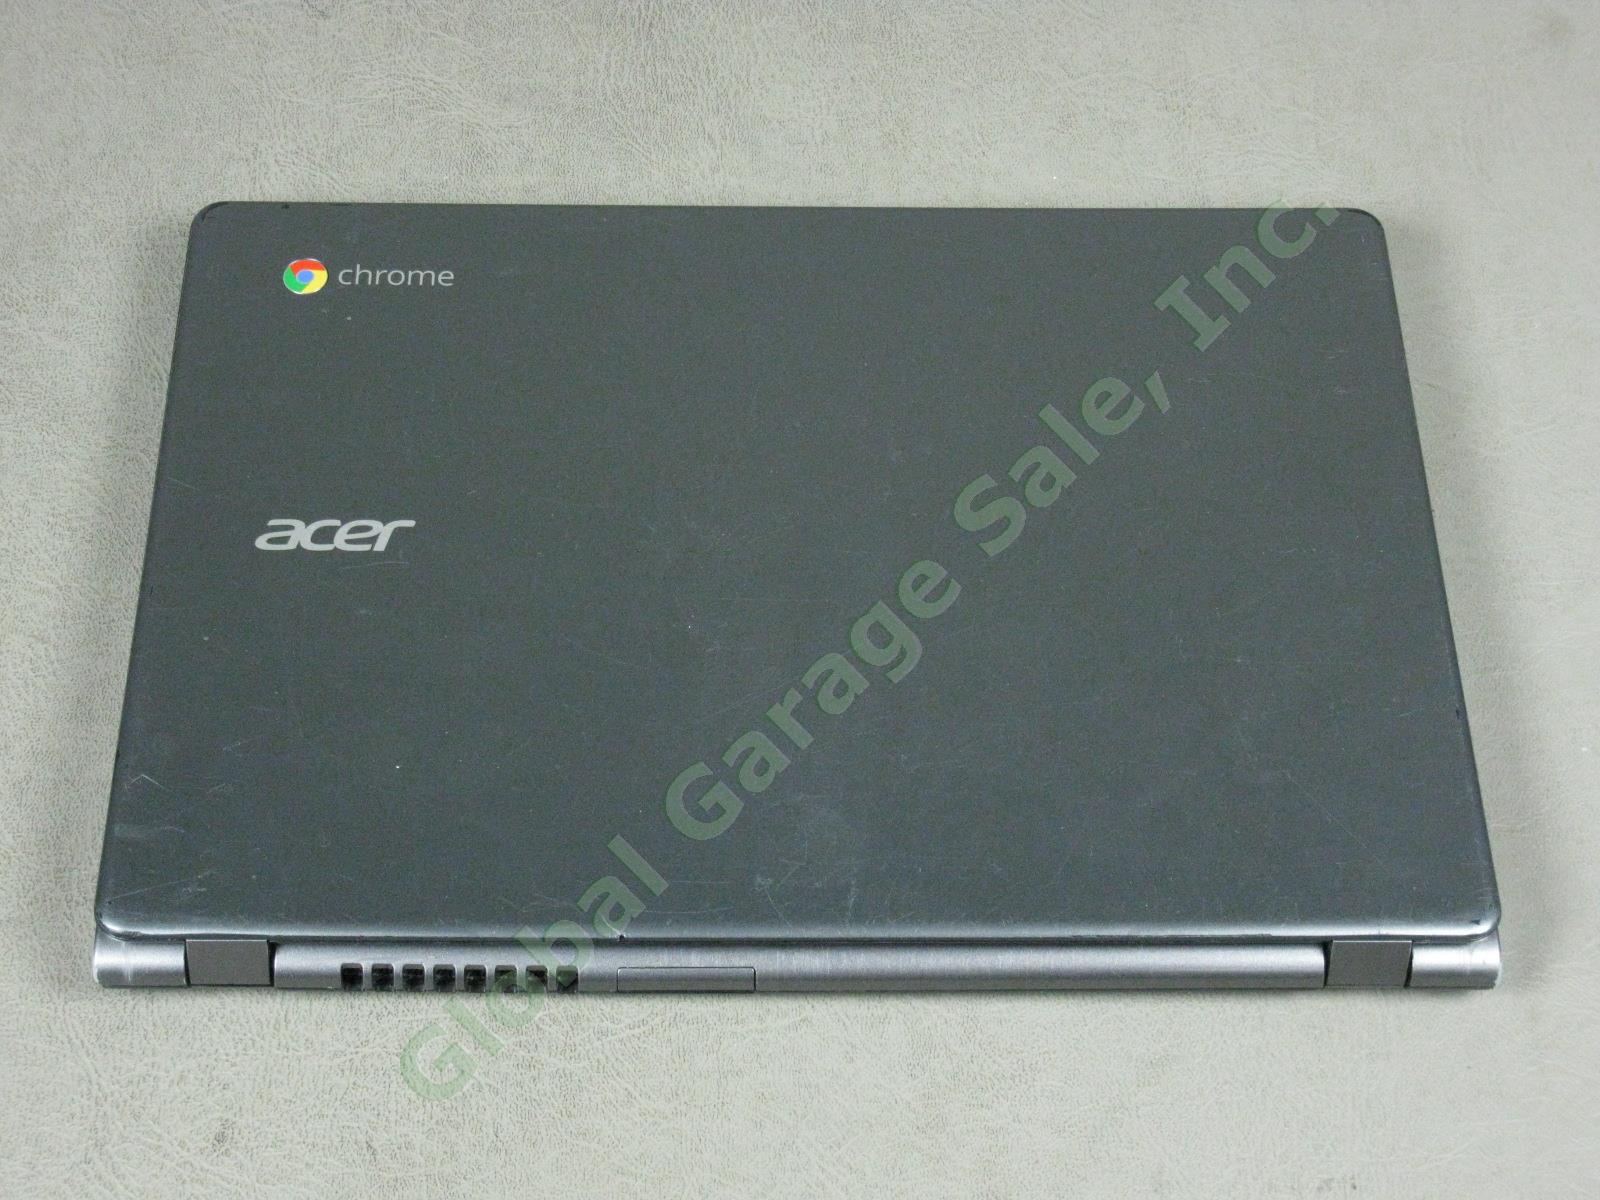 Acer Chromebook Netbook Laptop Computer C720-2844 11.6" 1.4GHz 4GB RAM 16GB SSD 4